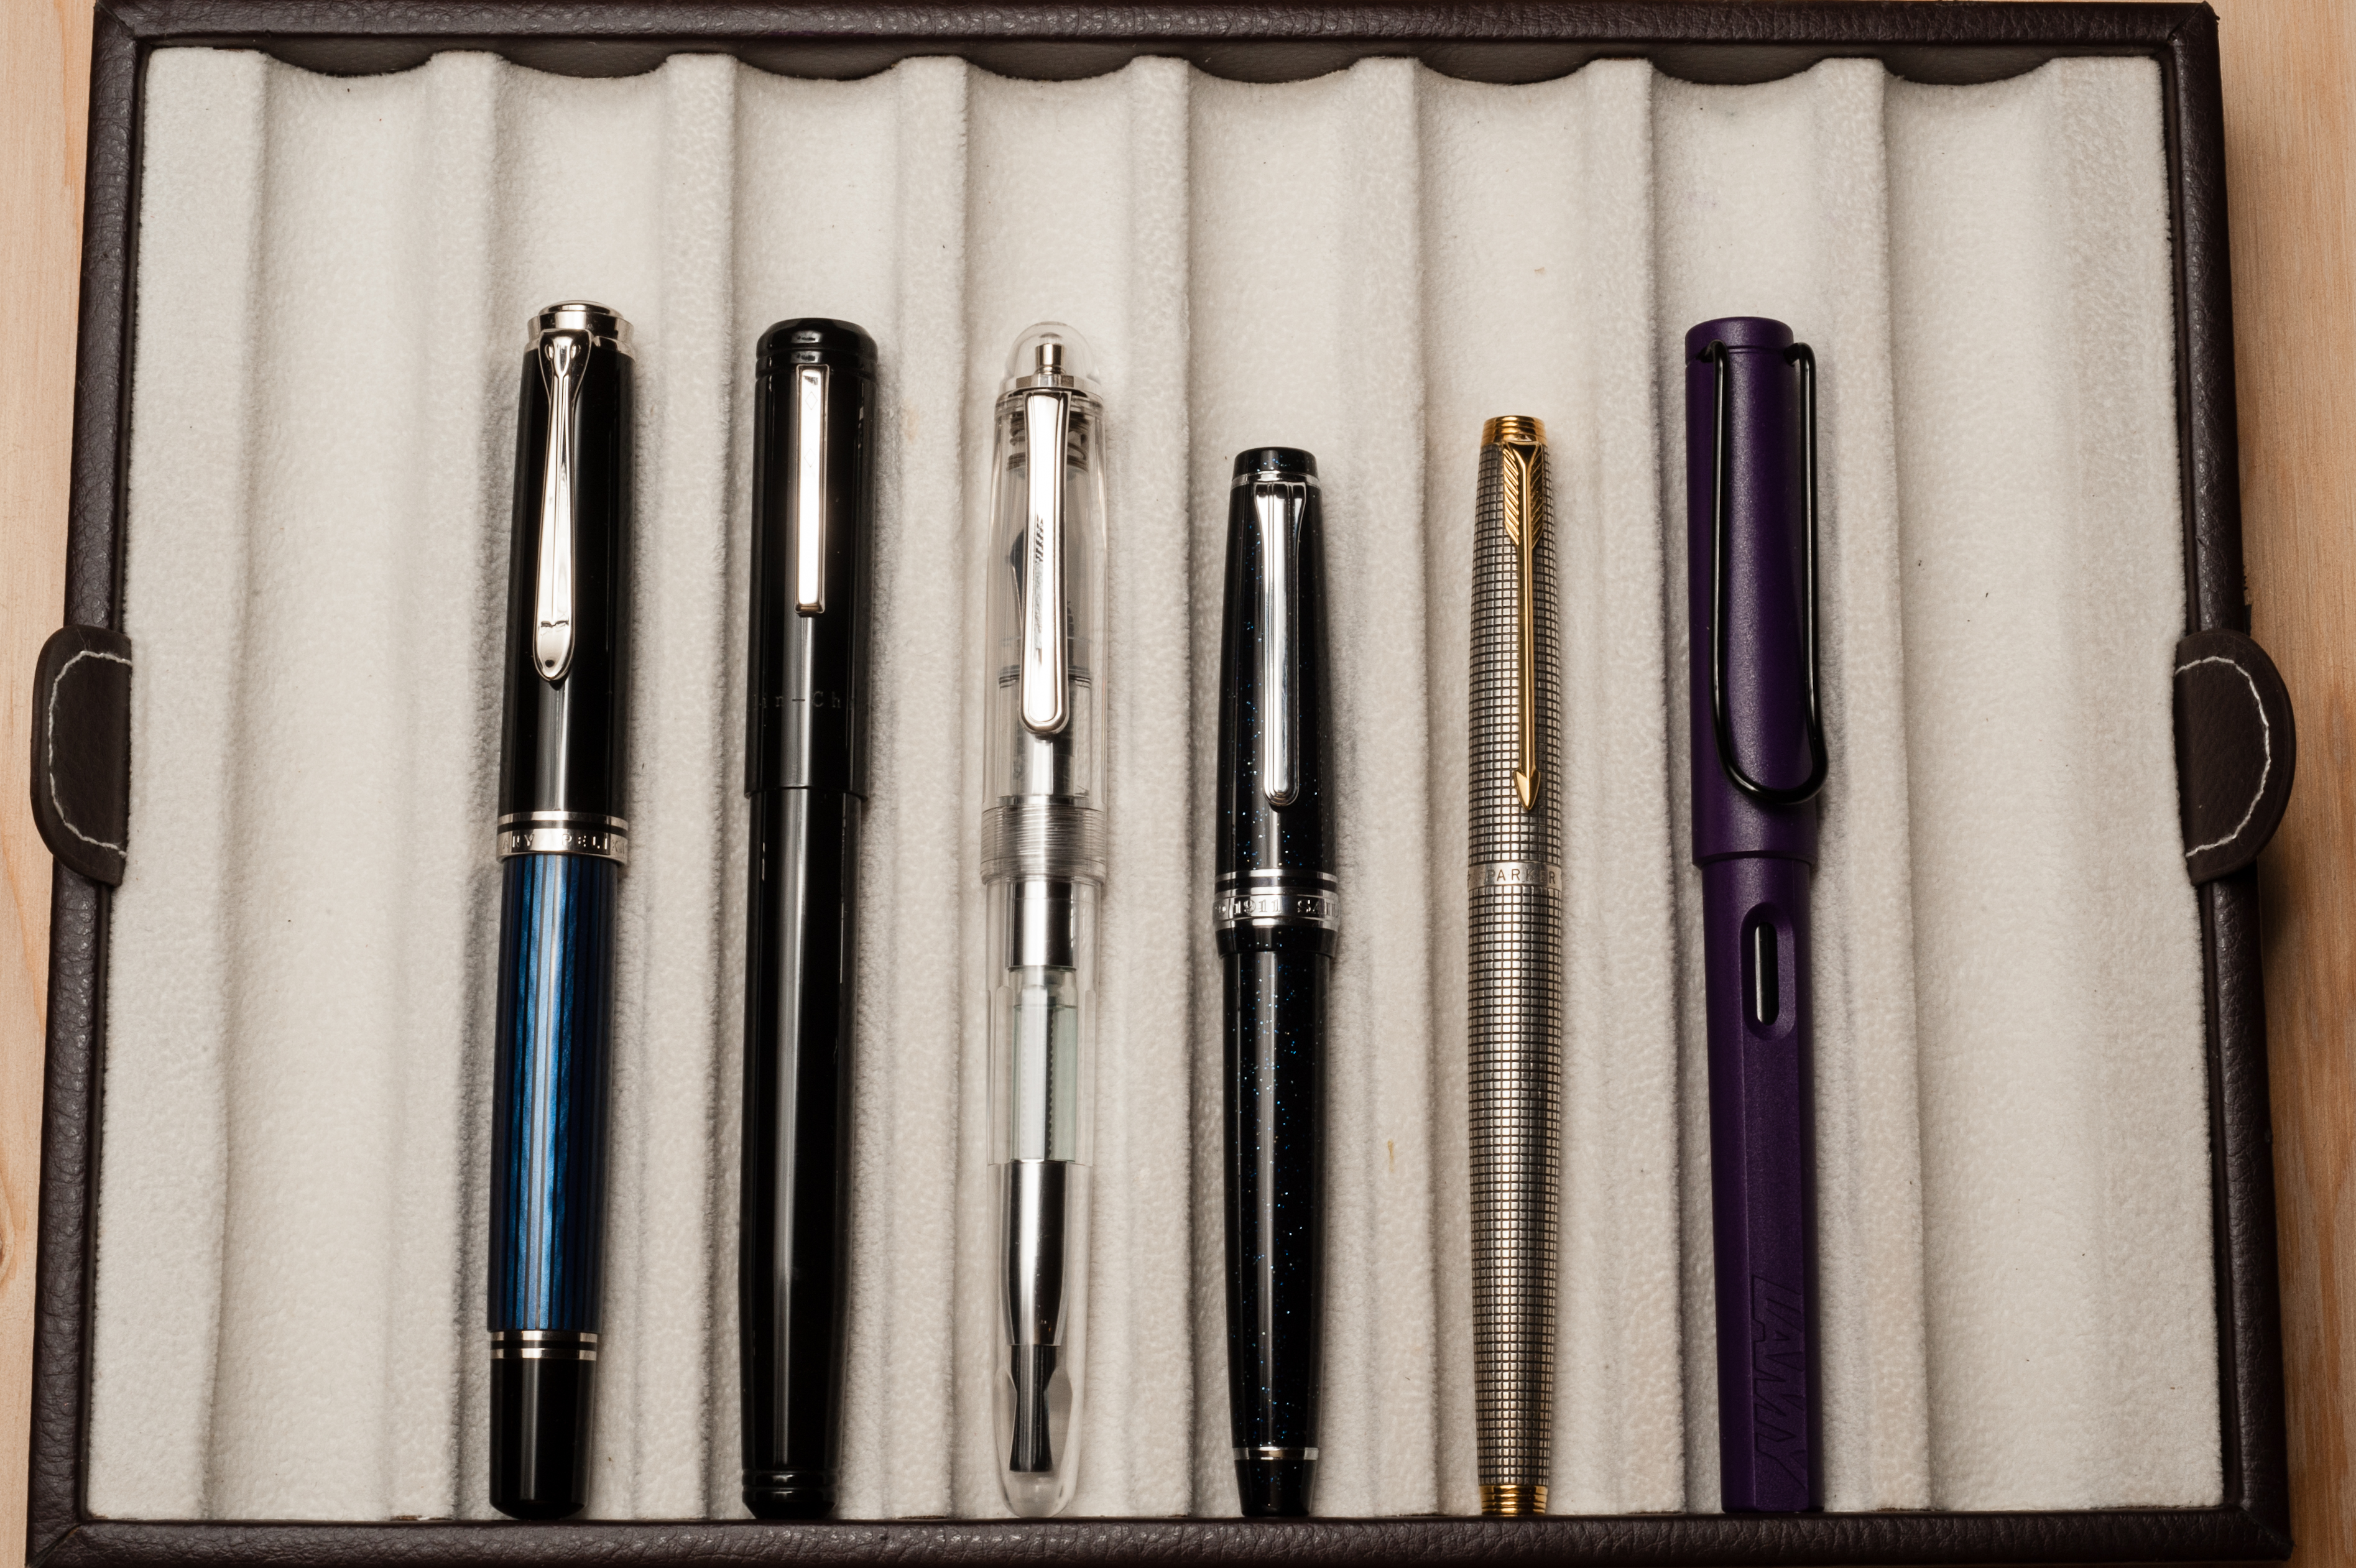 Closed pen from left to right: Pelikan M805, Franklin-Christoph Model 20, Platim Century 3776, Sailor Pro Gear Slim, Parker 75, and Lamy Safari